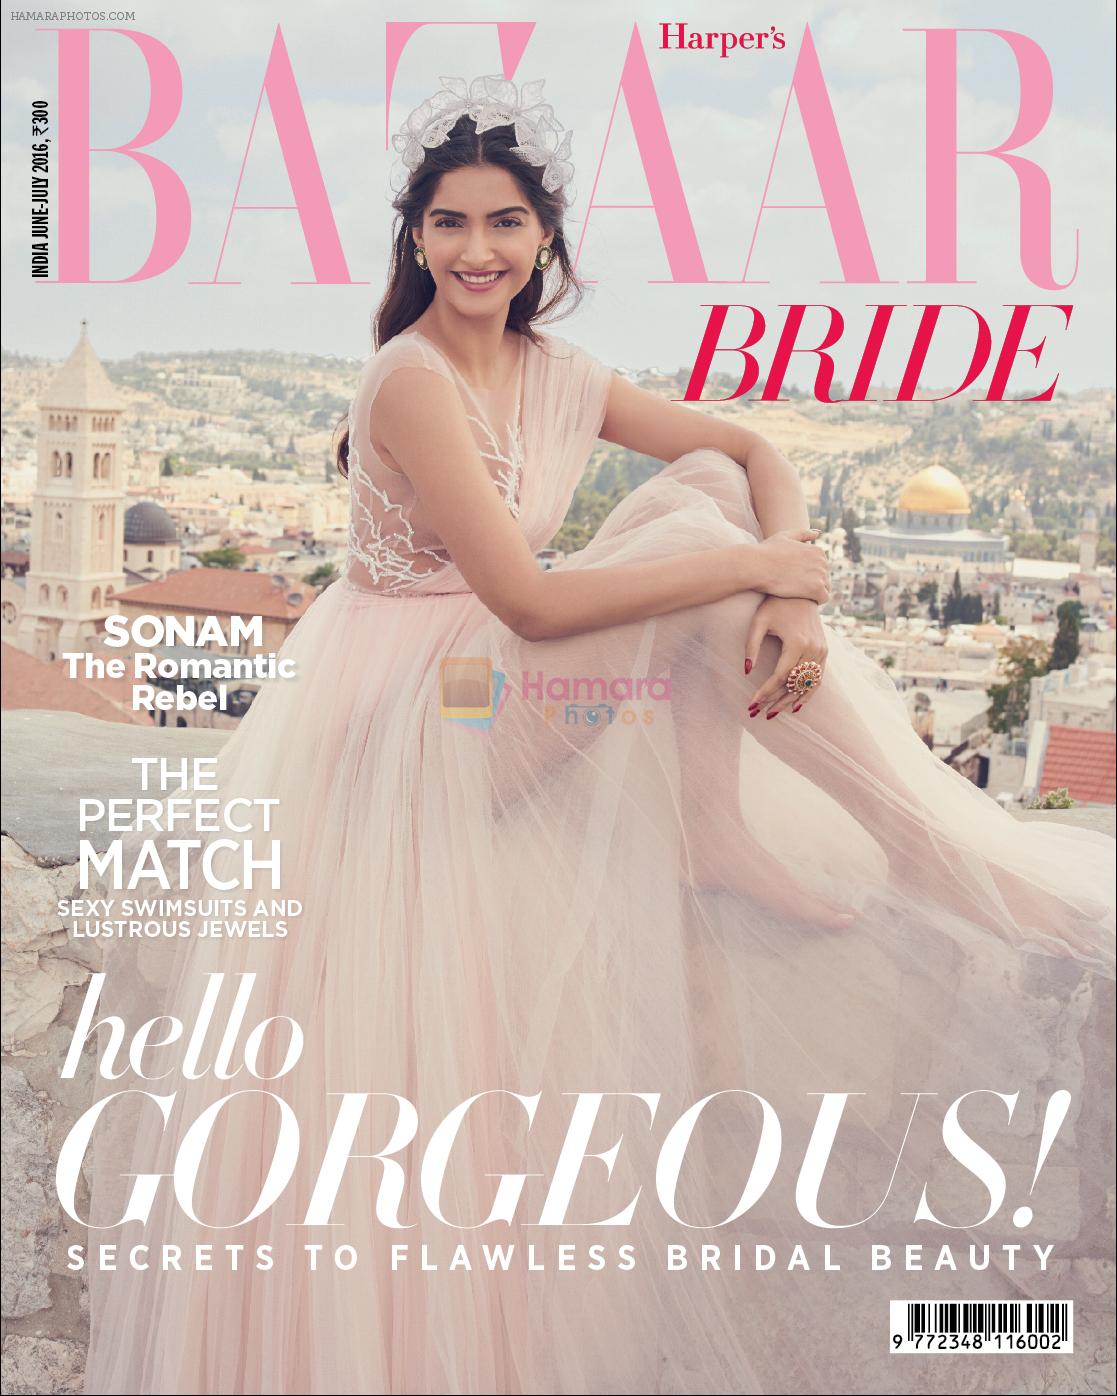 Sonam Kapoor on the cover of Harper's Bazaar Bride double issue - June-July 2016